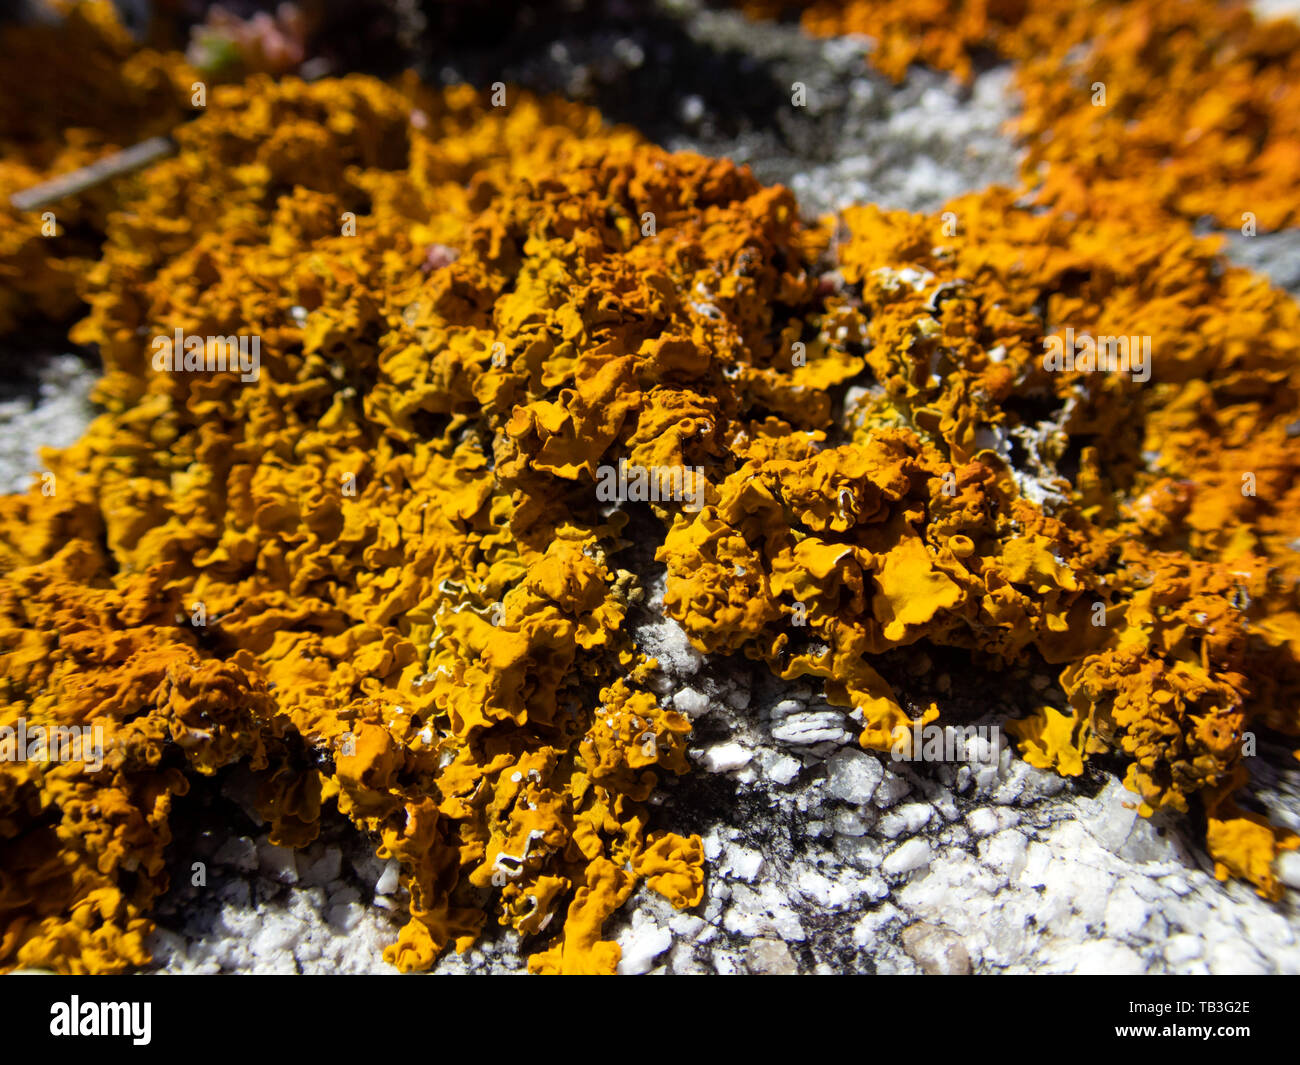 Lichen growing on rock Stock Photo